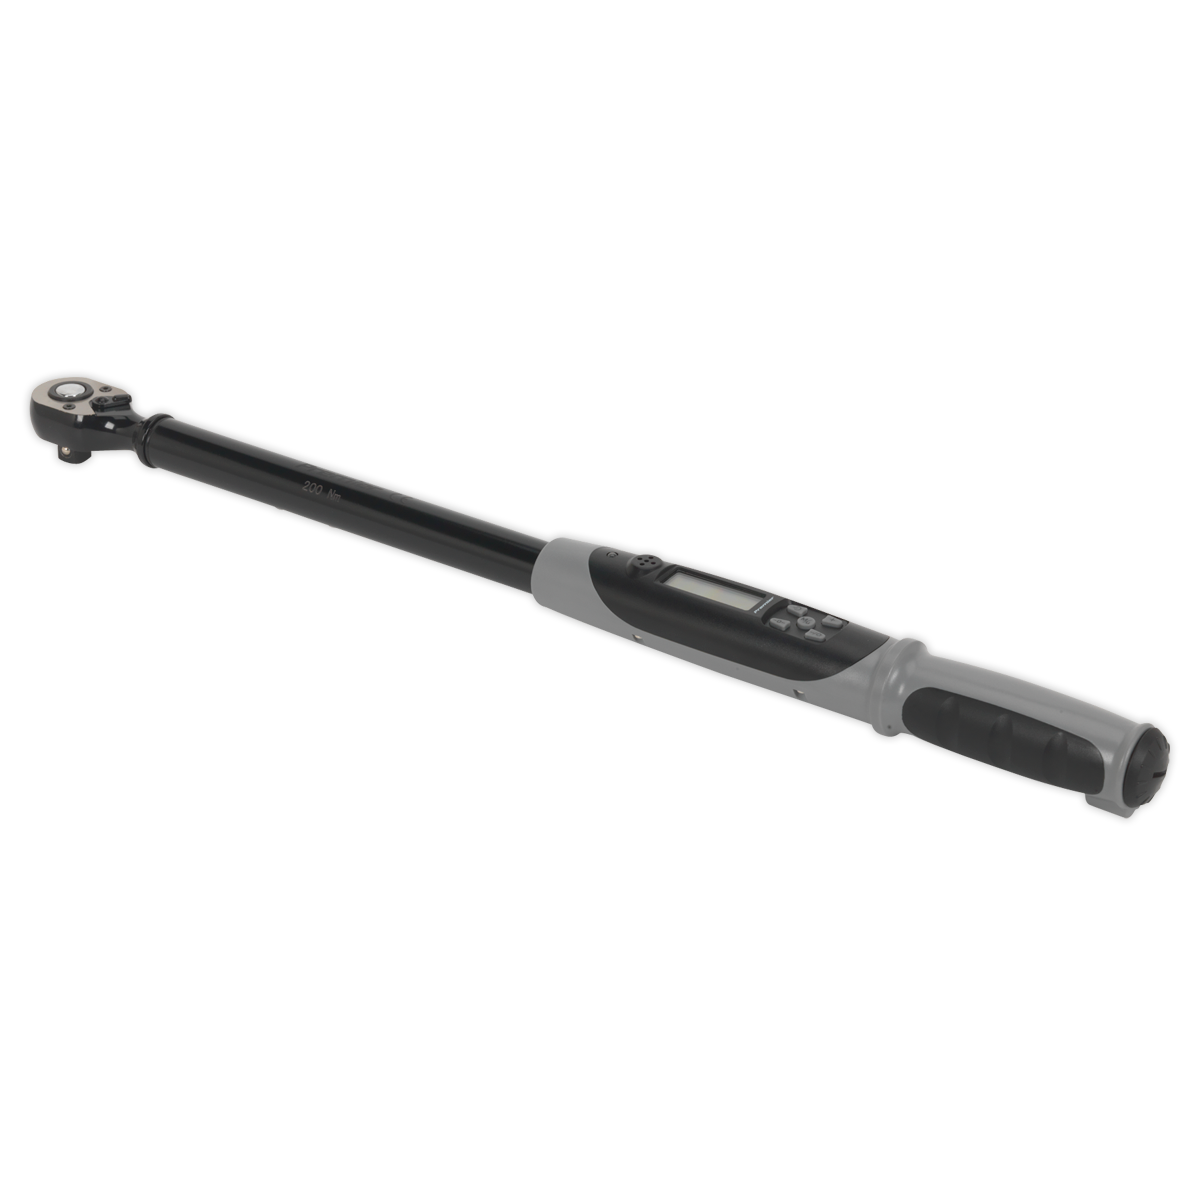 Sealey Angle Torque Wrench Digital 1/2"Sq Drive 20-200Nm(14.7-147.5lb.ft) Black Series